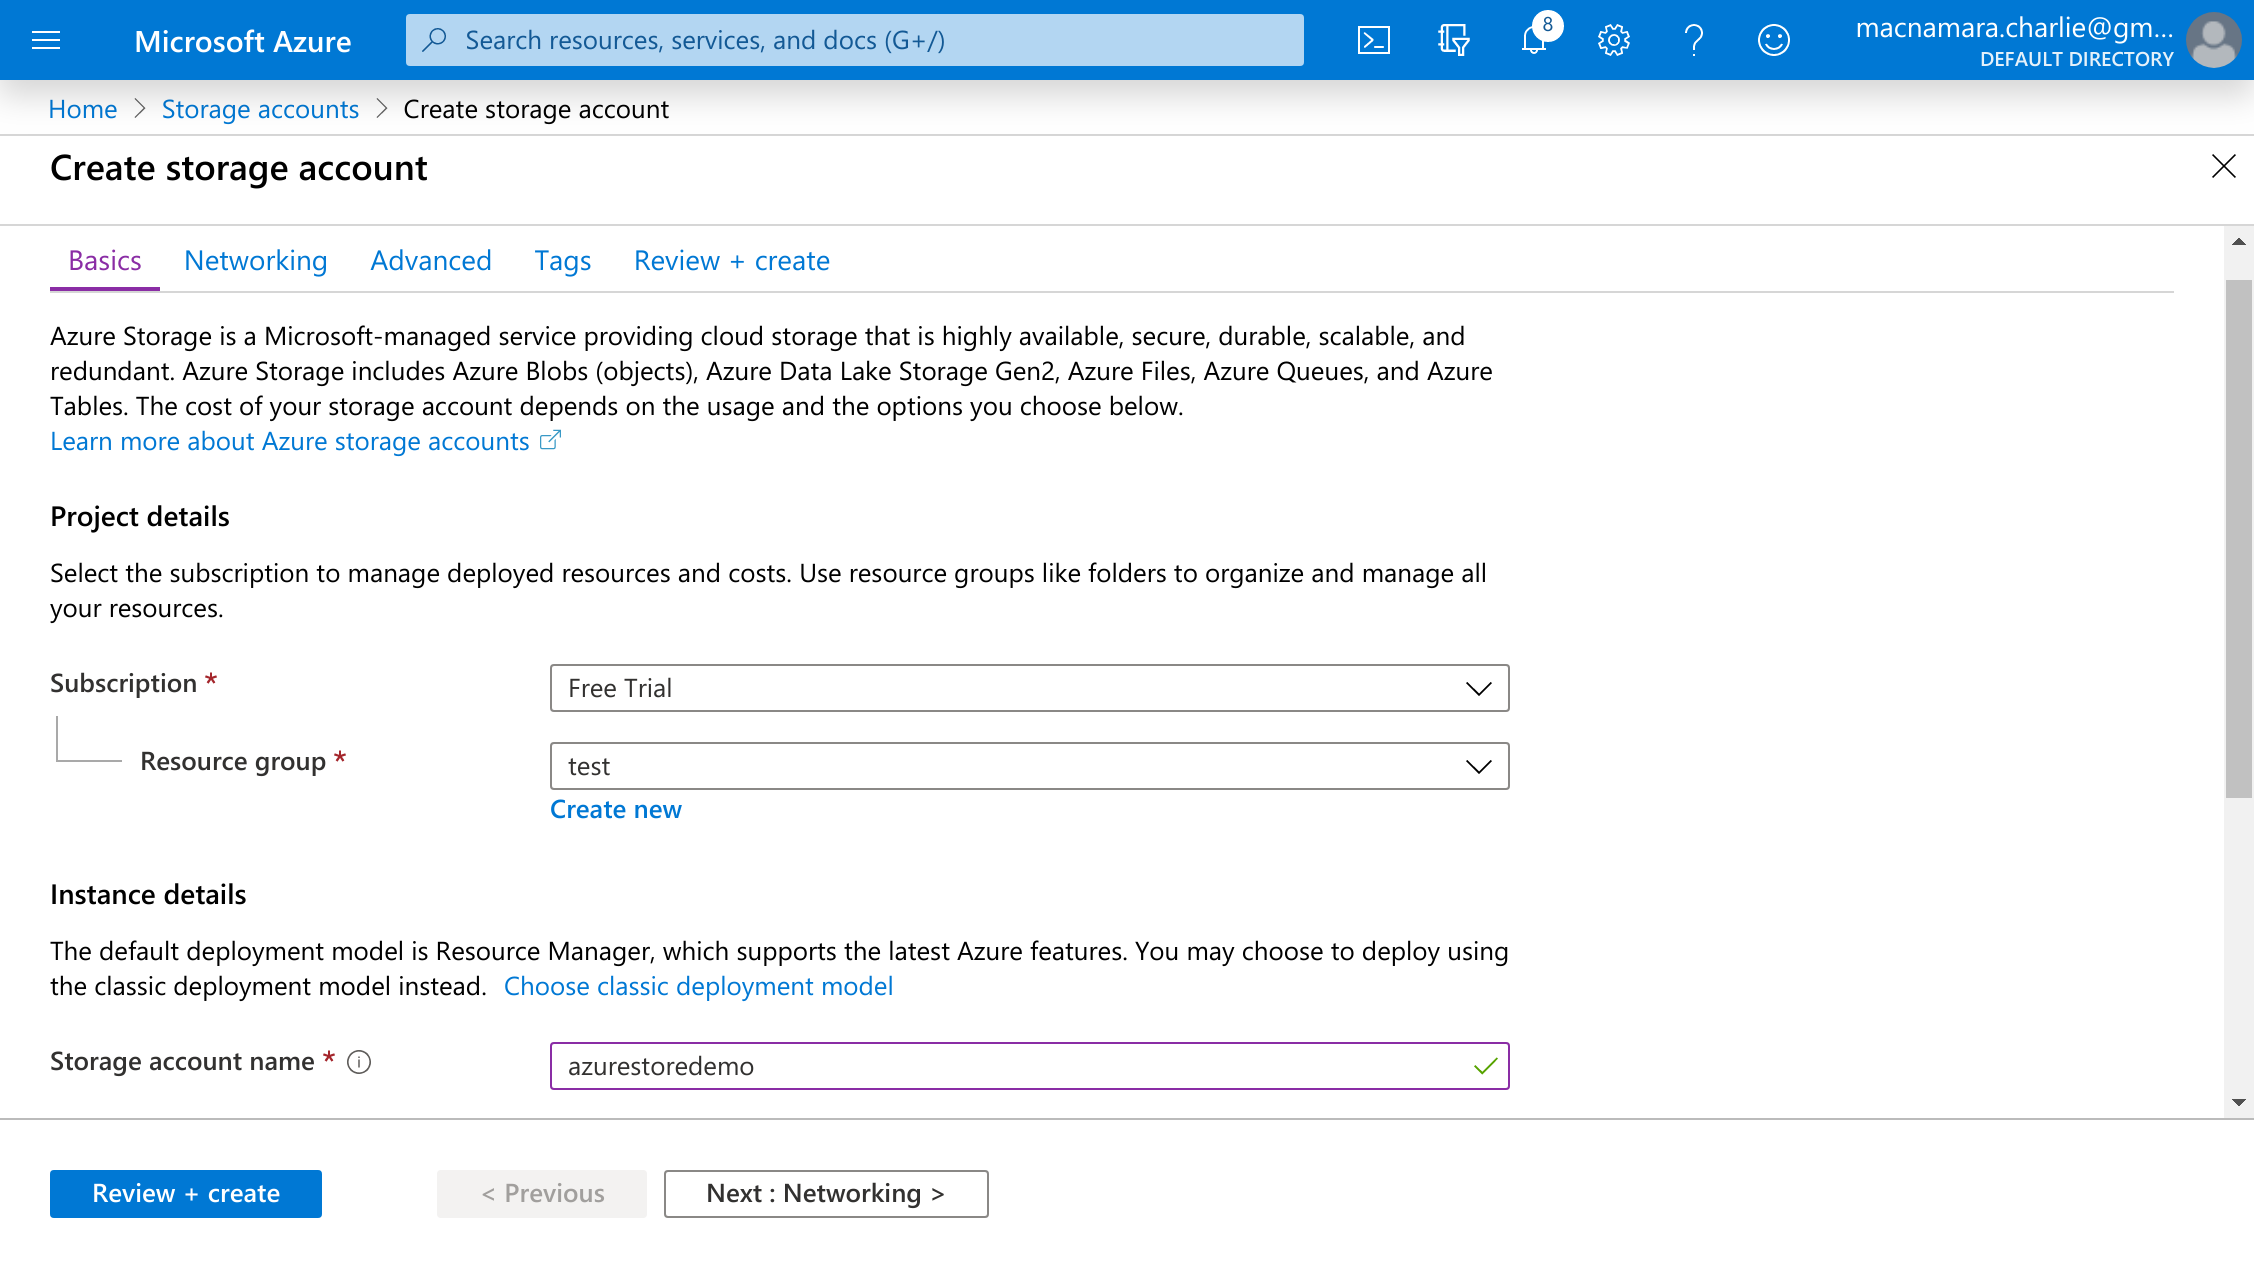 The Microsoft Azure 'Create storage account' page